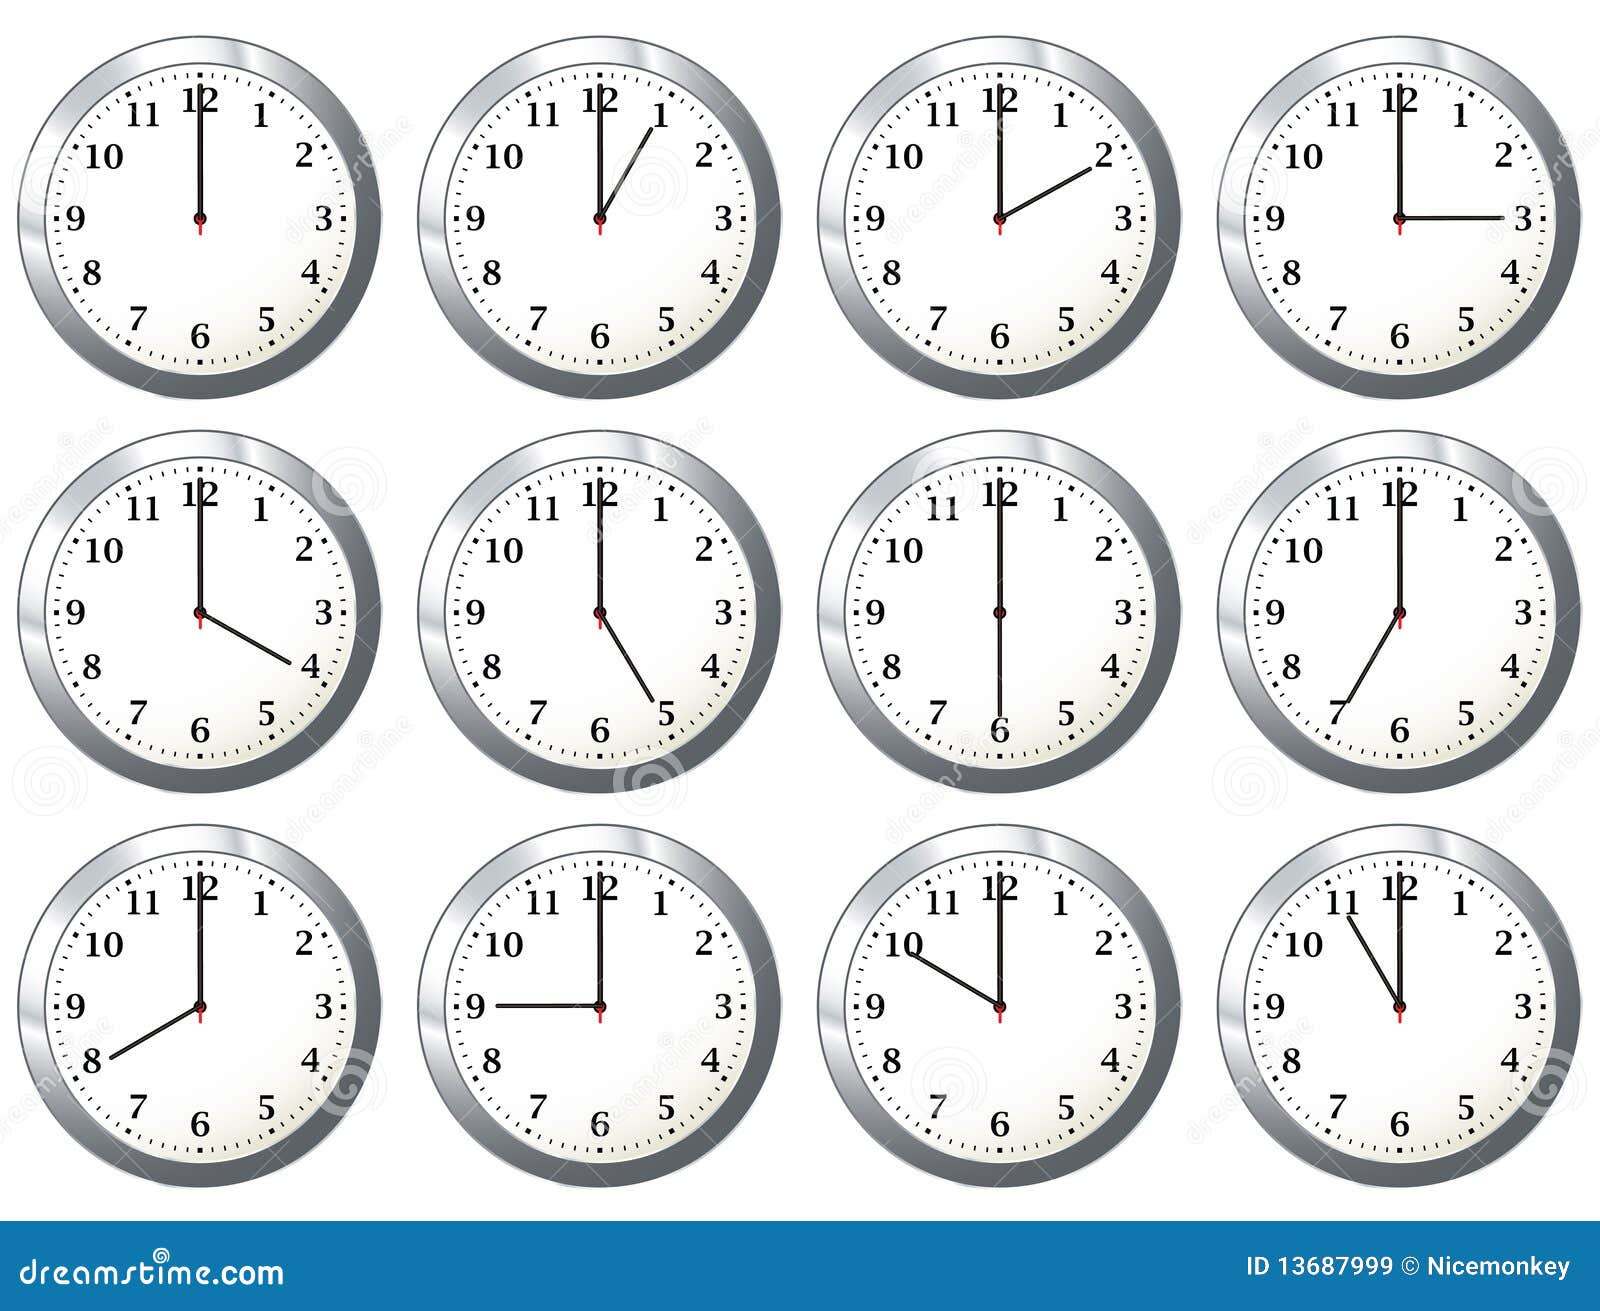 Office clock all times stock illustration. Illustration of surround -  13687999